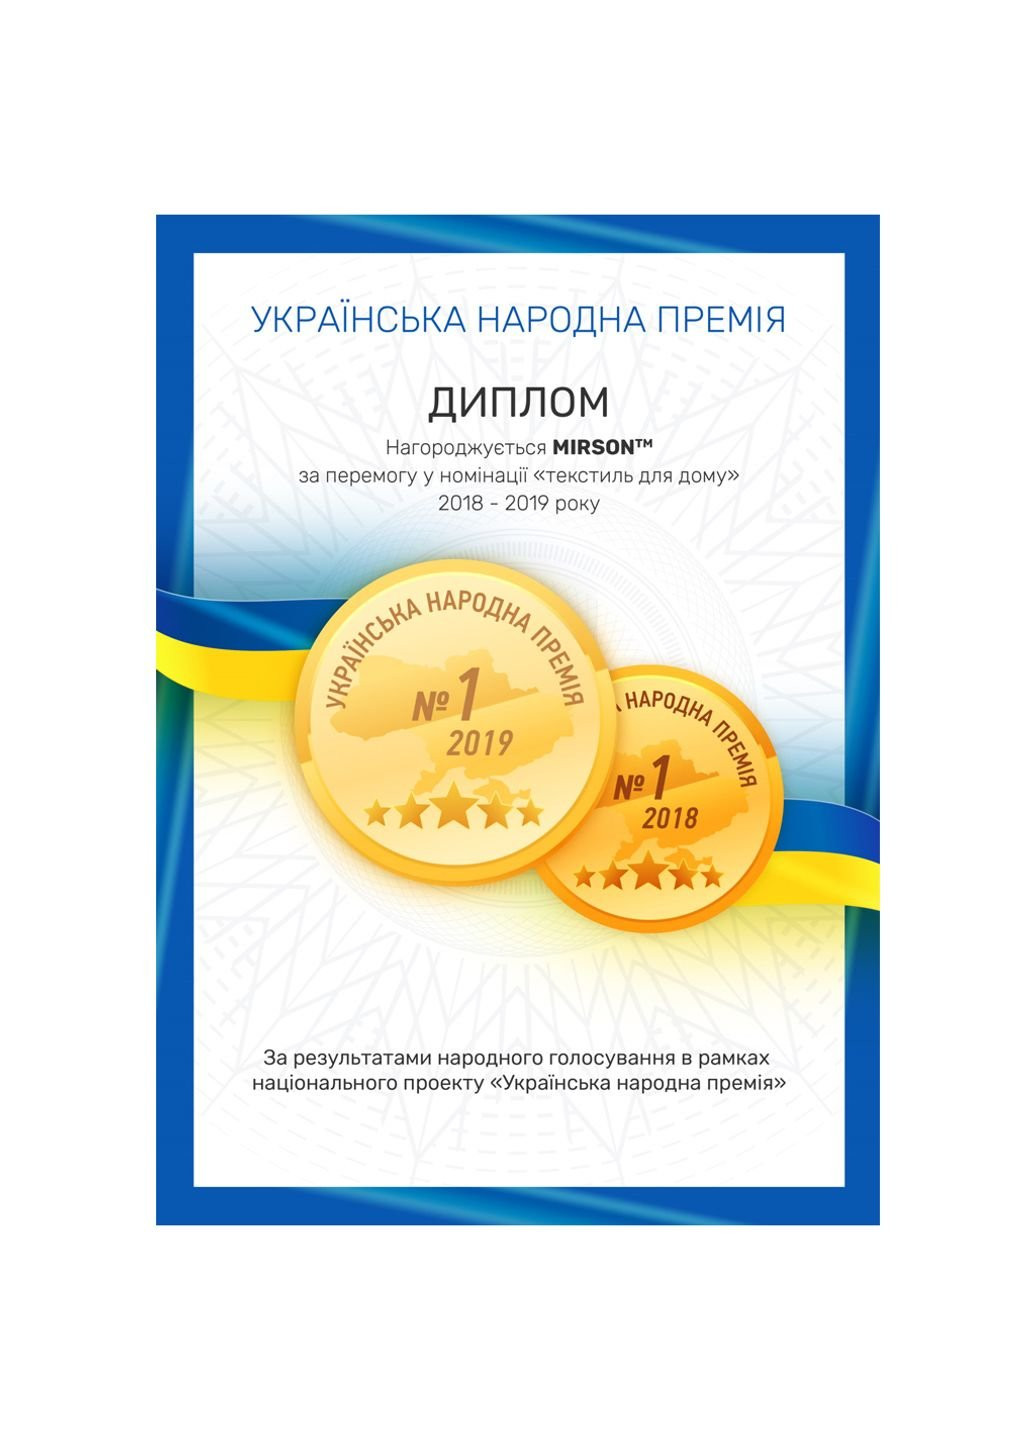 Mirson полотенце набор банный №5010 softness peach 40x70, 50x90, 70x140, 100x (2200003183344) персиковый производство - Украина